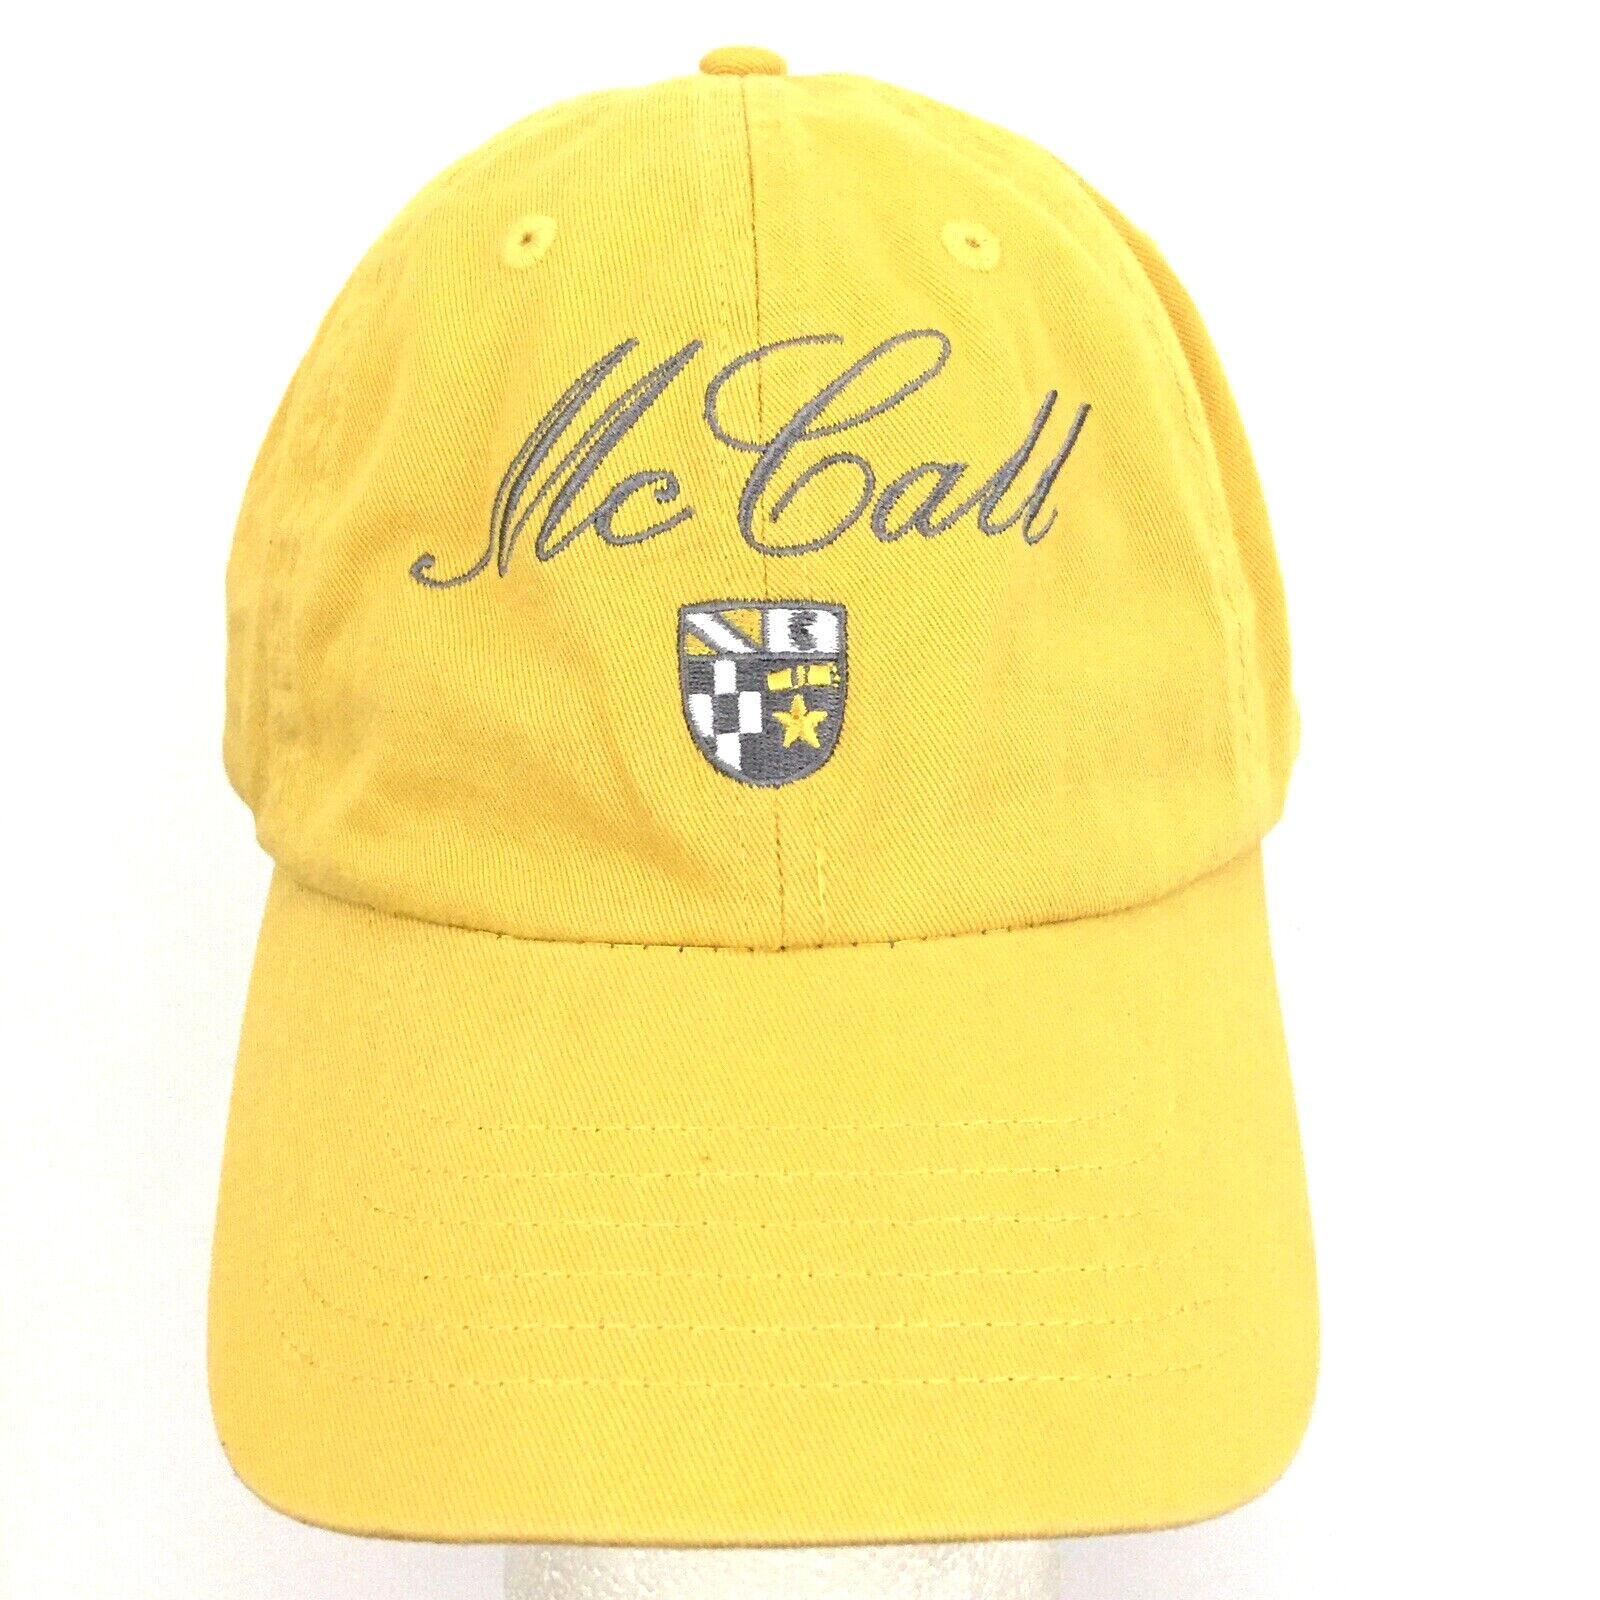 McCall Motorworks Revival Hat Pebble Beach Concours Monterey Flag Golf Ball Cap